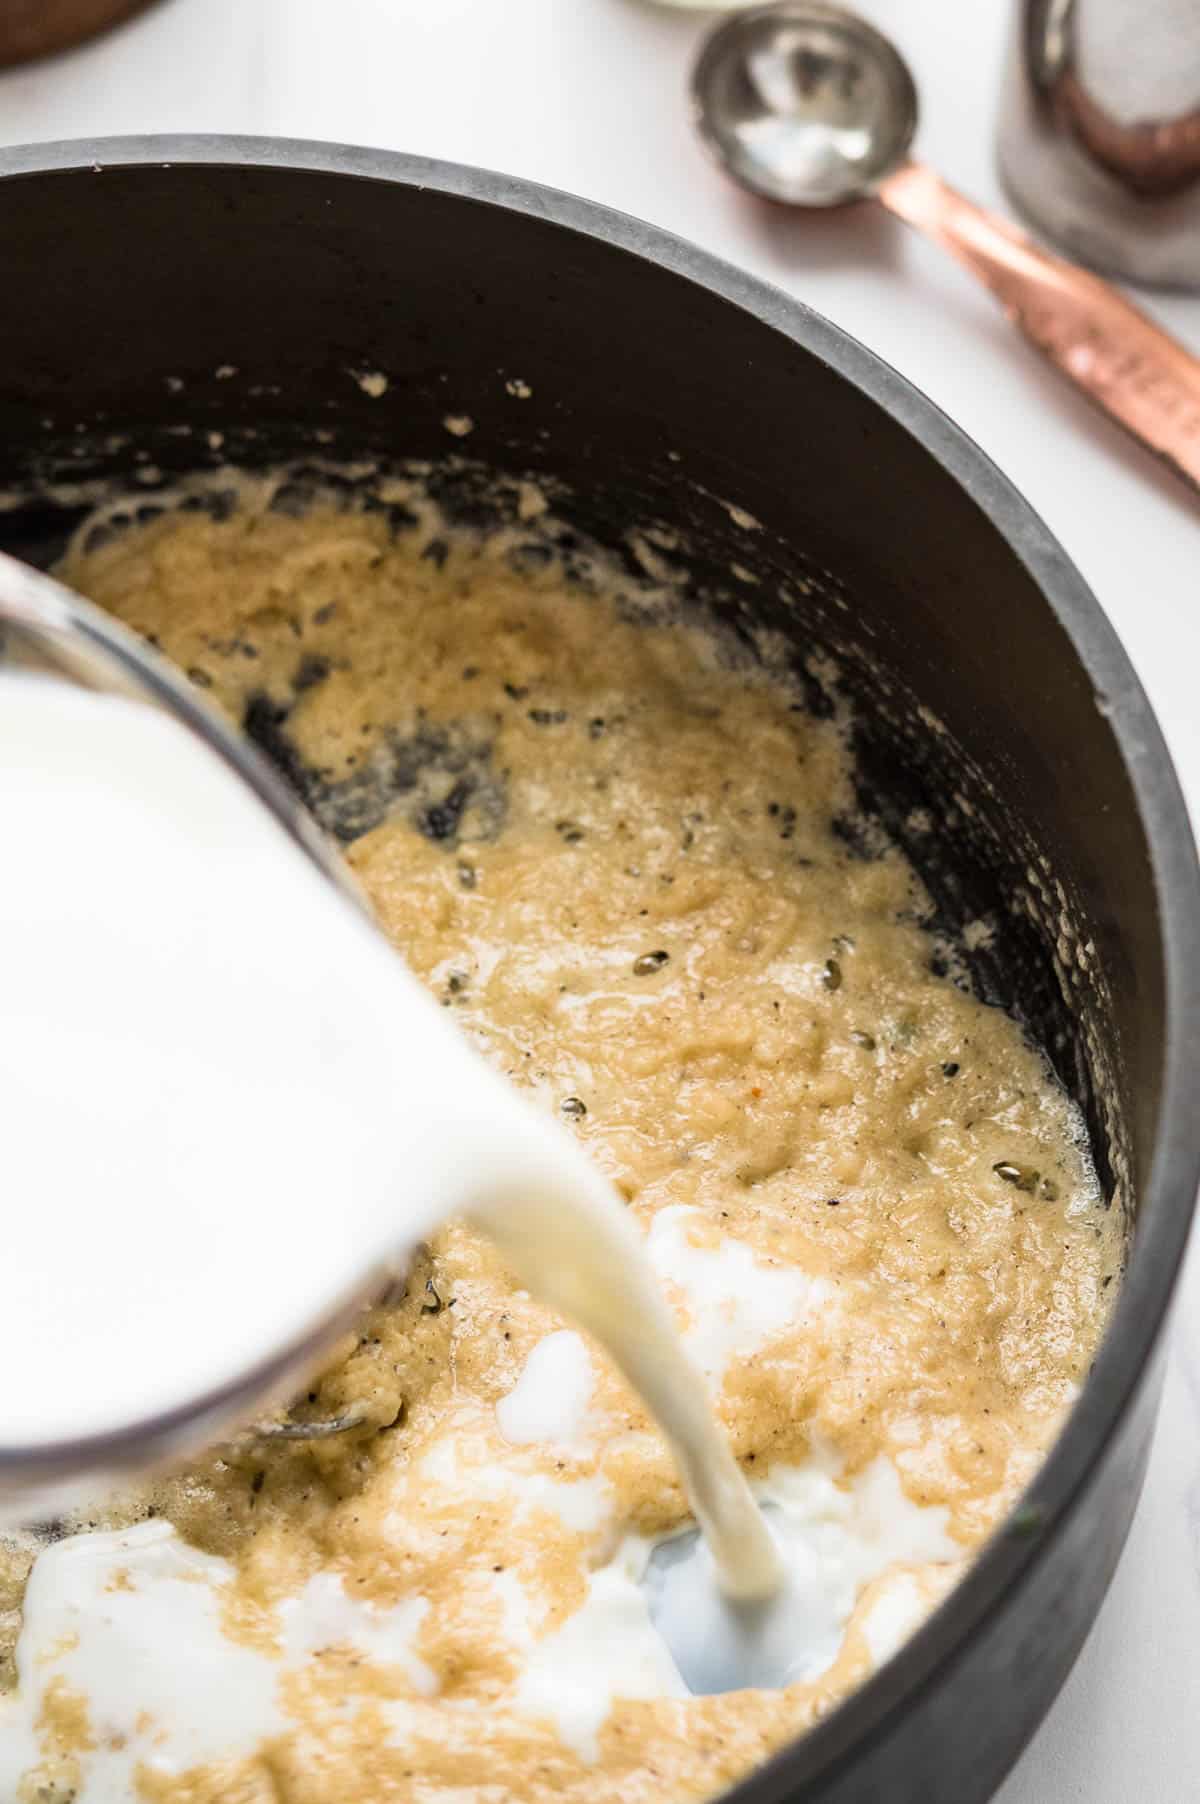 adding milk to the roux makes a creamy sauce for spinach artichoke dip recipe.